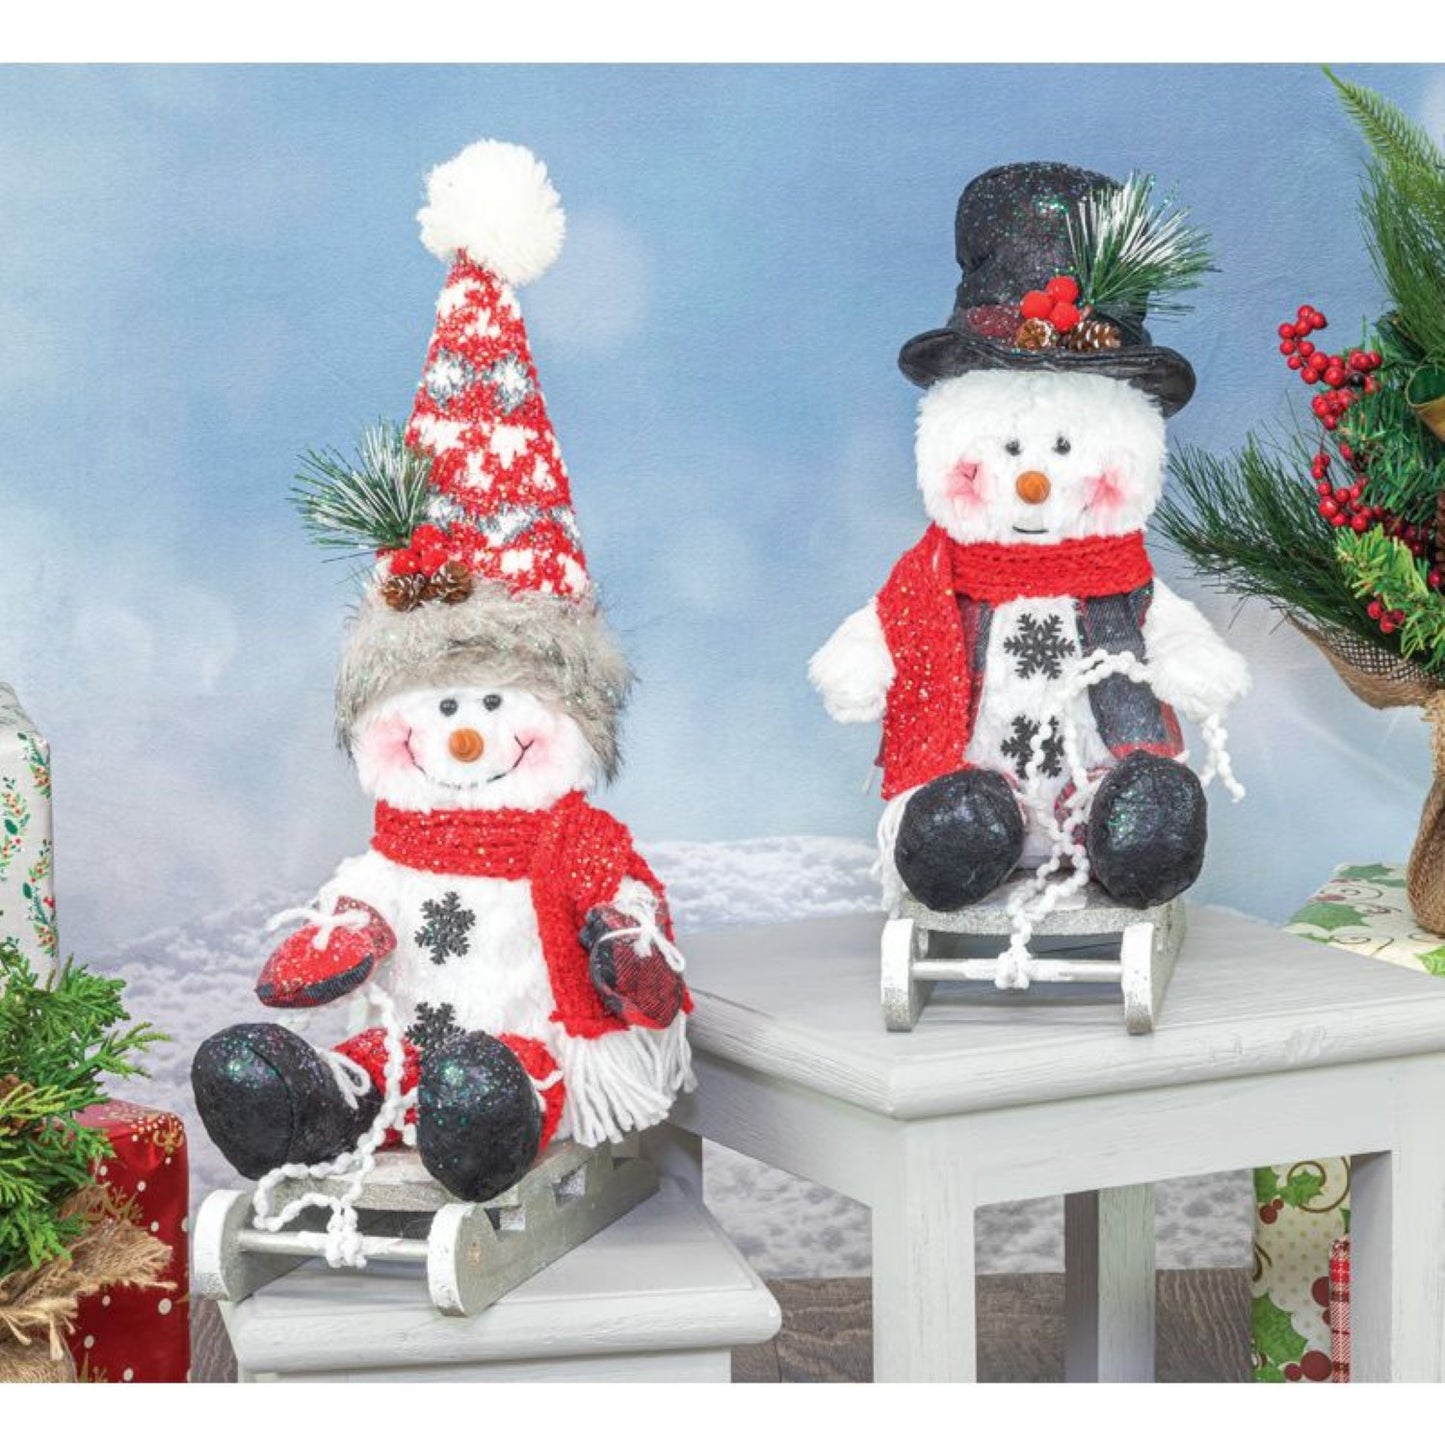 Hanna's Handiworks Holiday Plaid Snowman Sledder Set Of 2 Assortment.